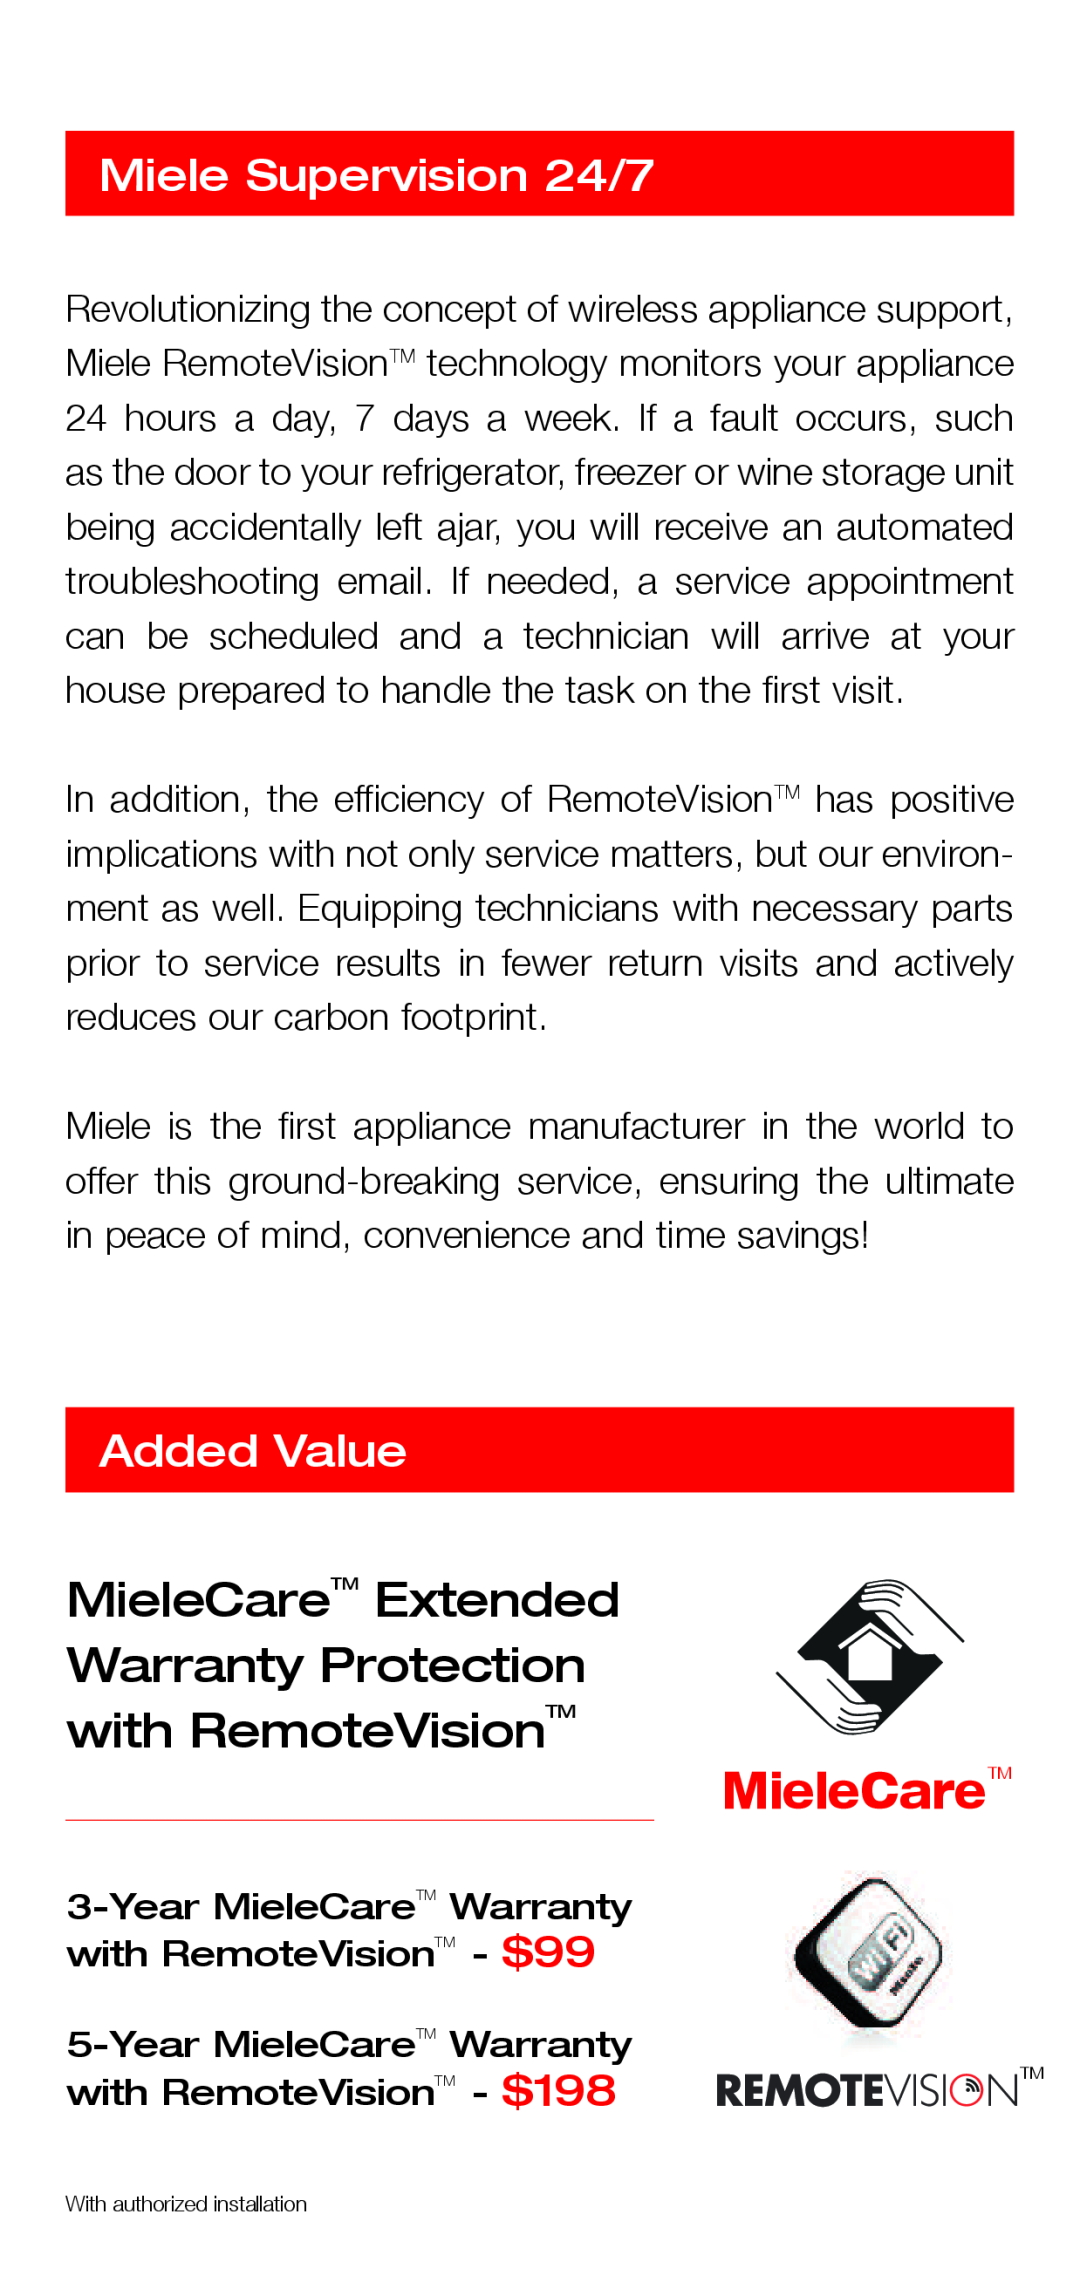 Miele B999790 manual Miele Supervision 24/7, Added Value, MieleCareTM, Remotevisiontm 